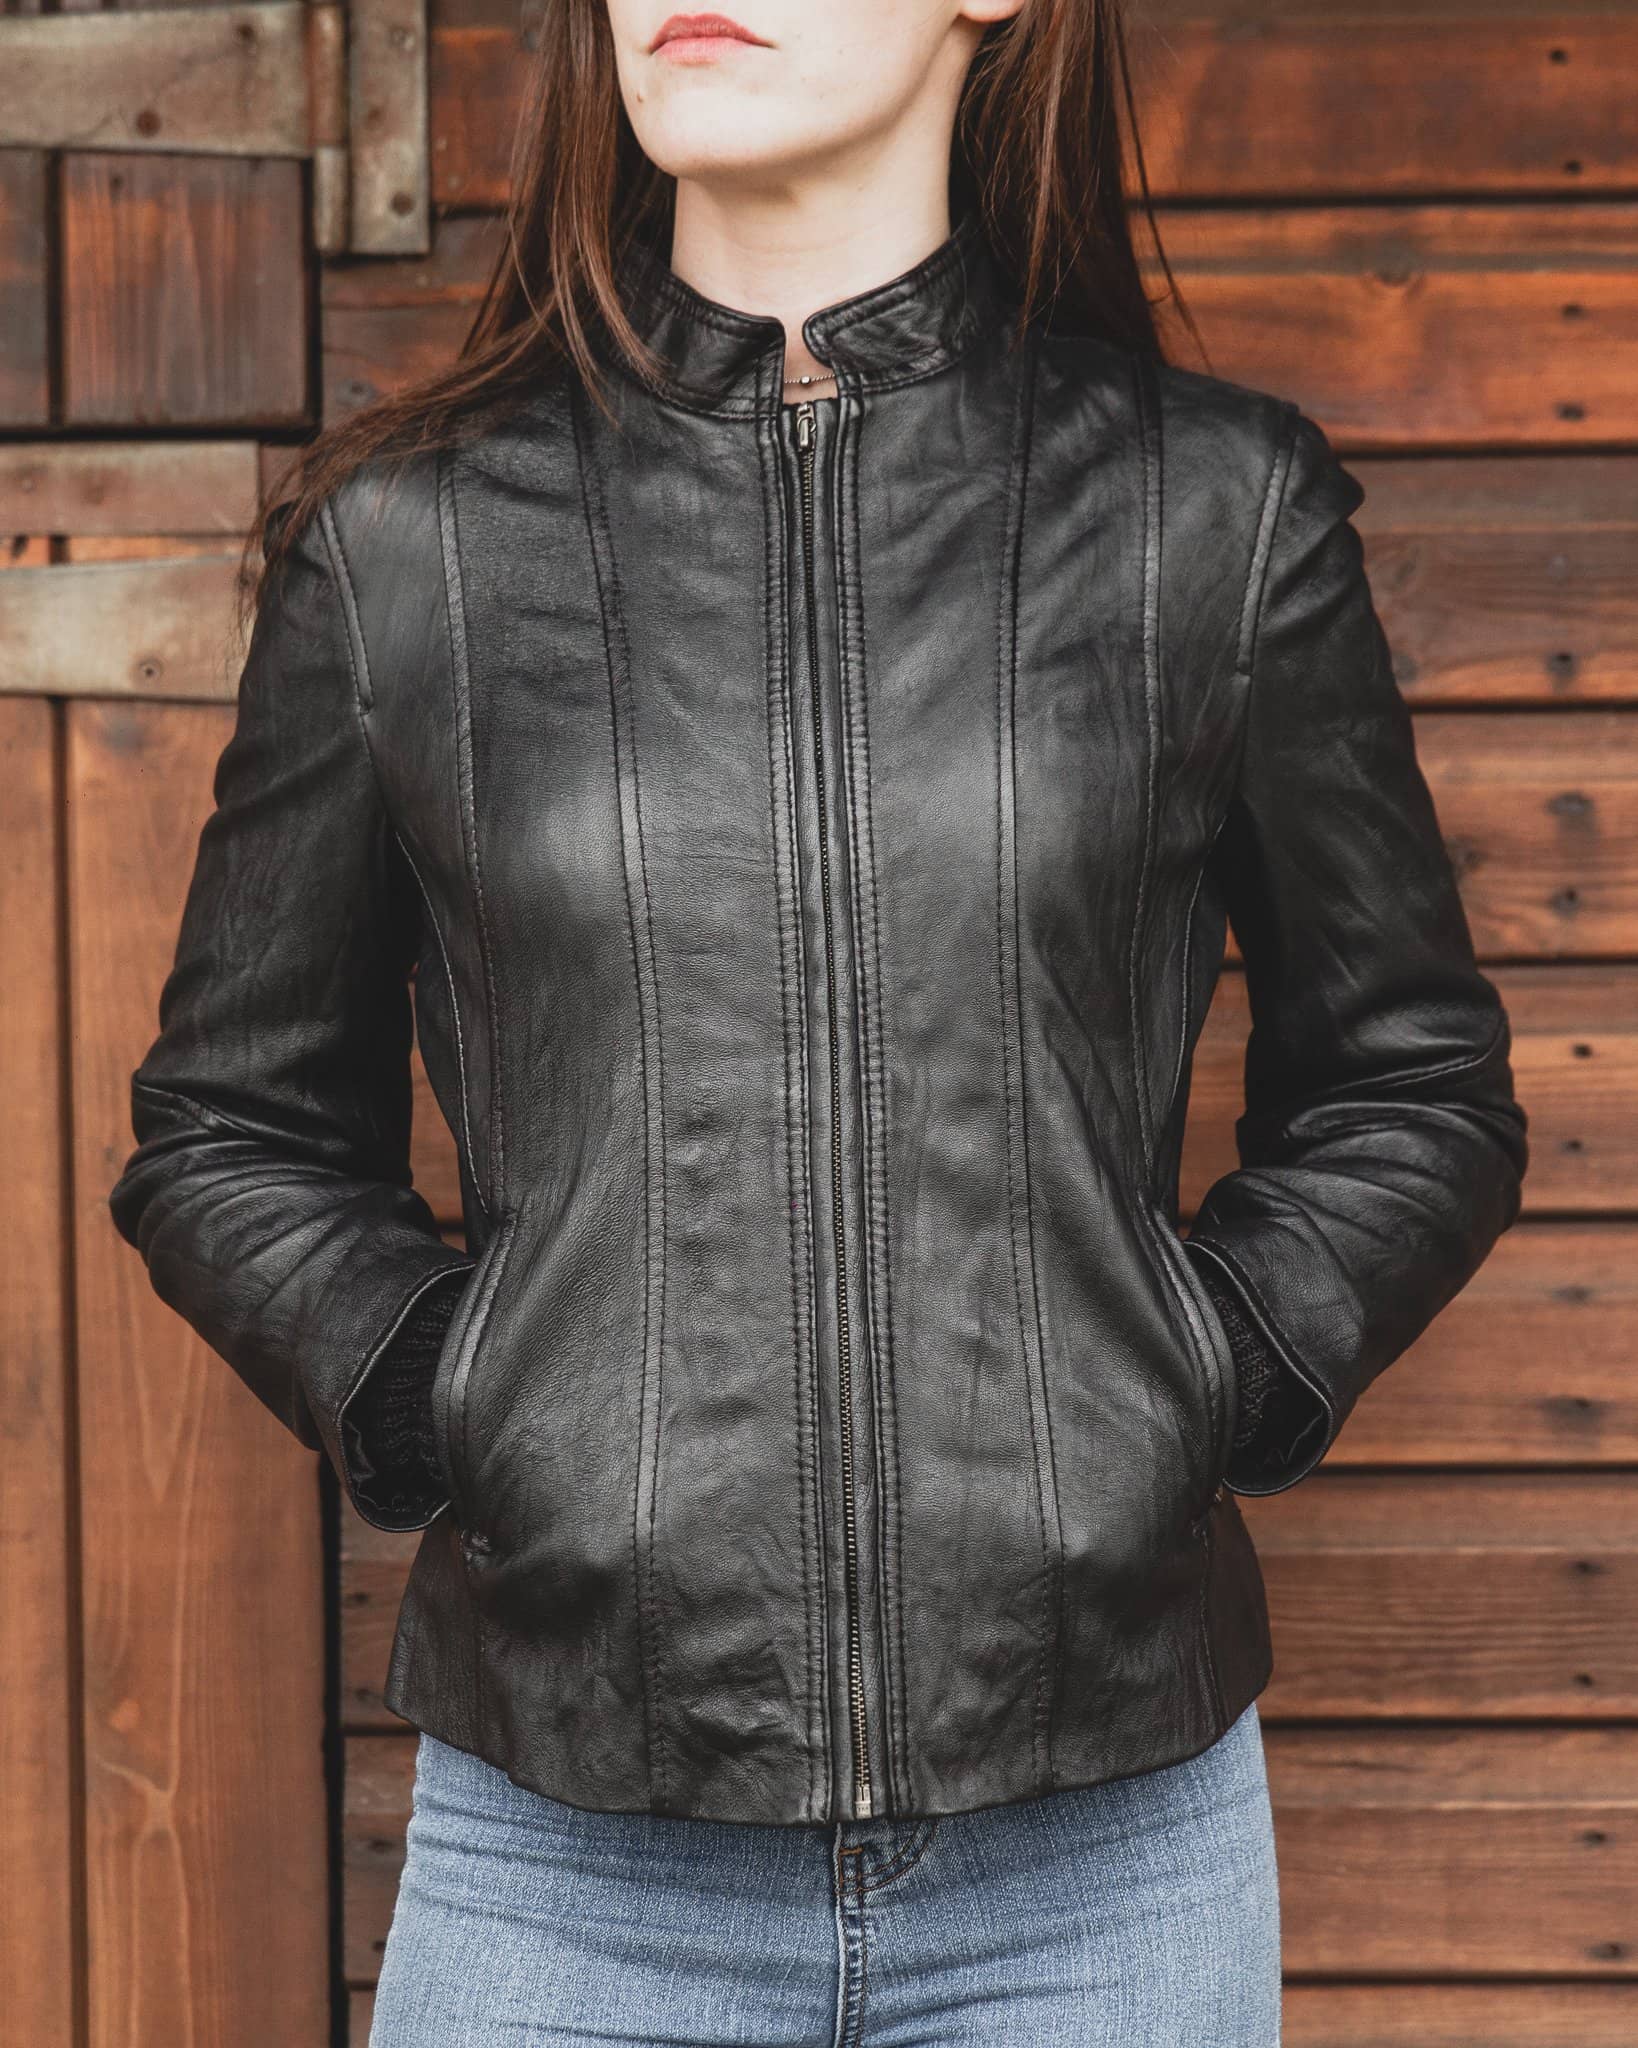 Nordvek womens leather jacket 714-100 black on model full outfit